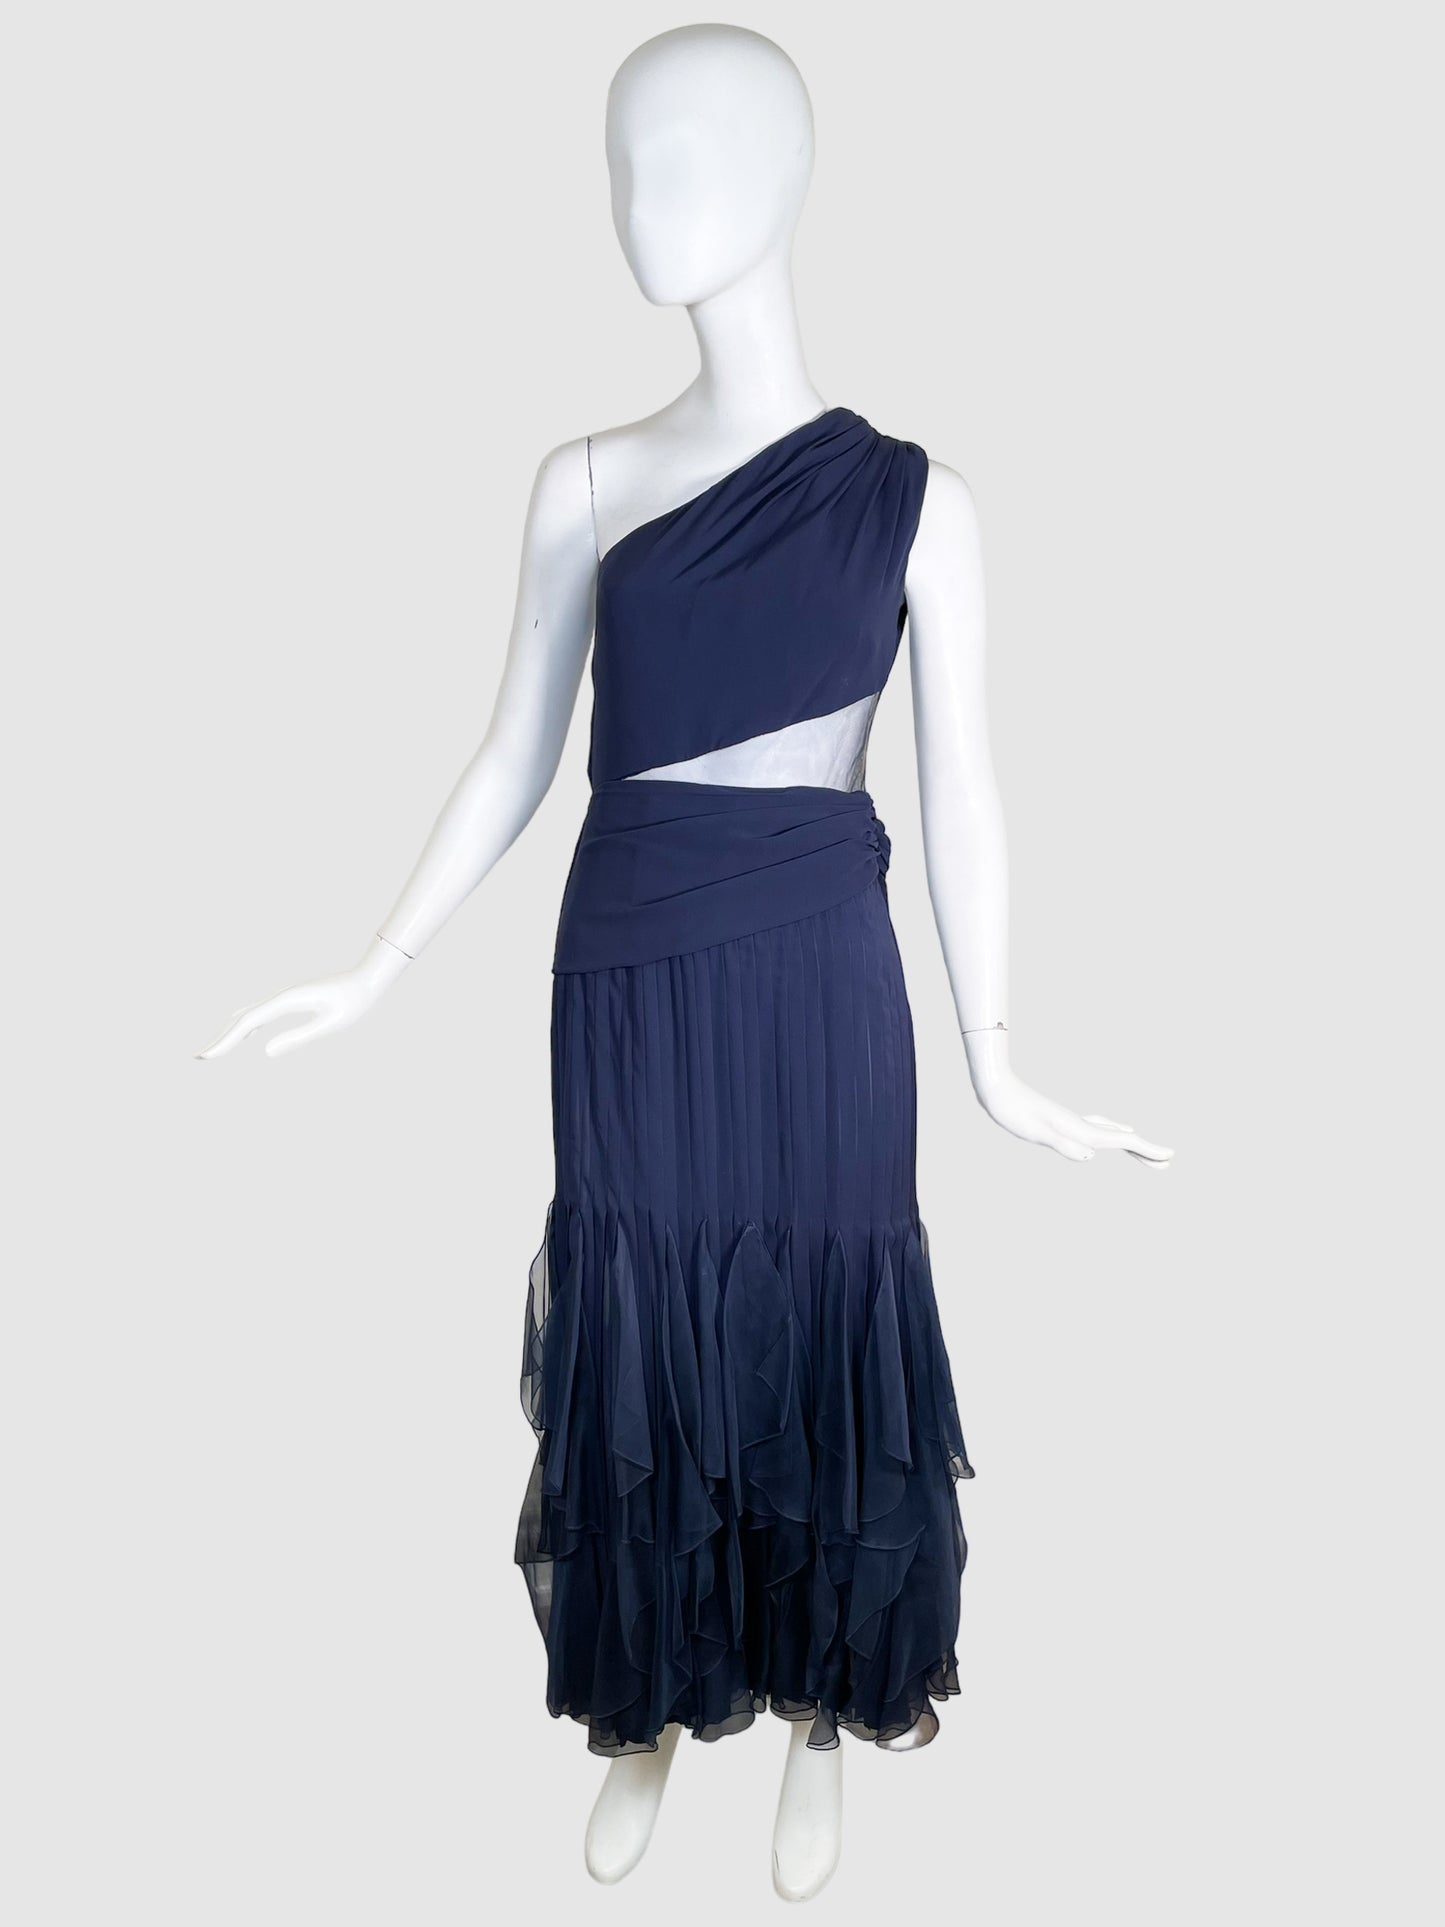 Valentino Boutique Mermaid Dress - Size S